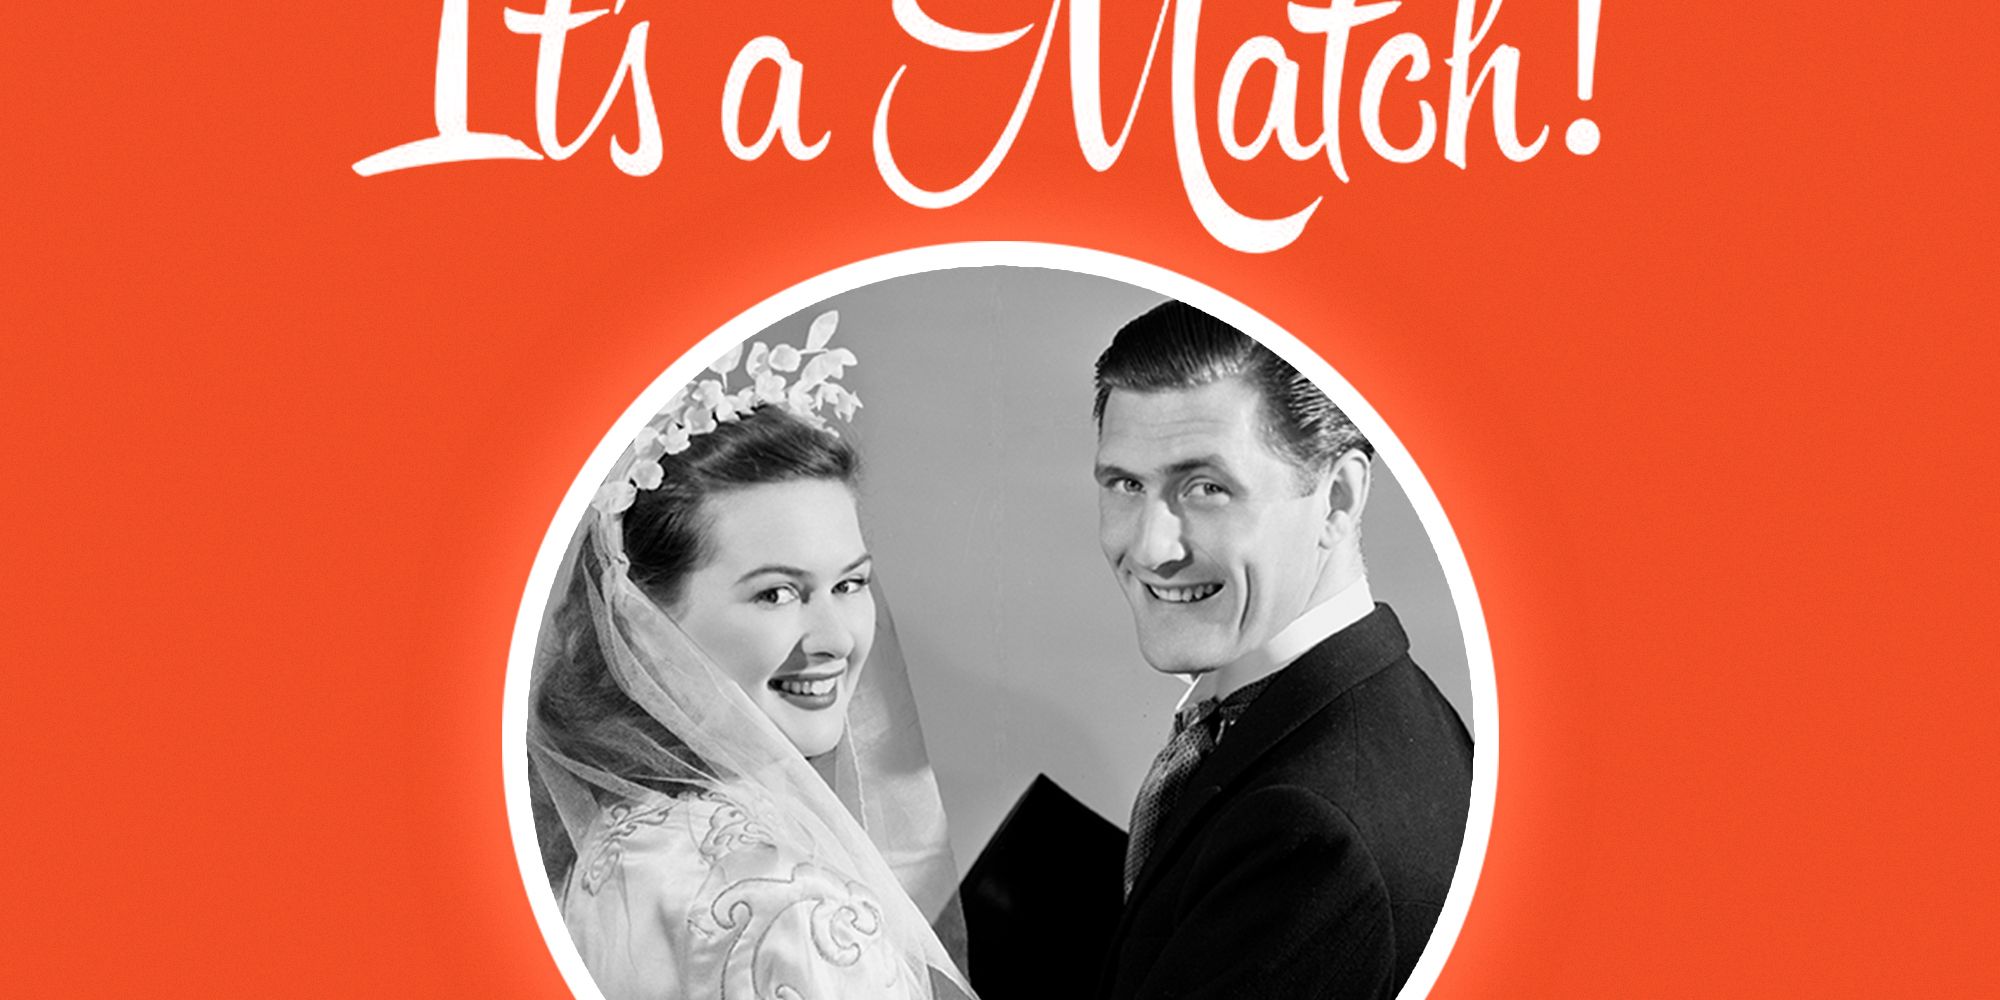 legitimate dating sites for married people crossword printable